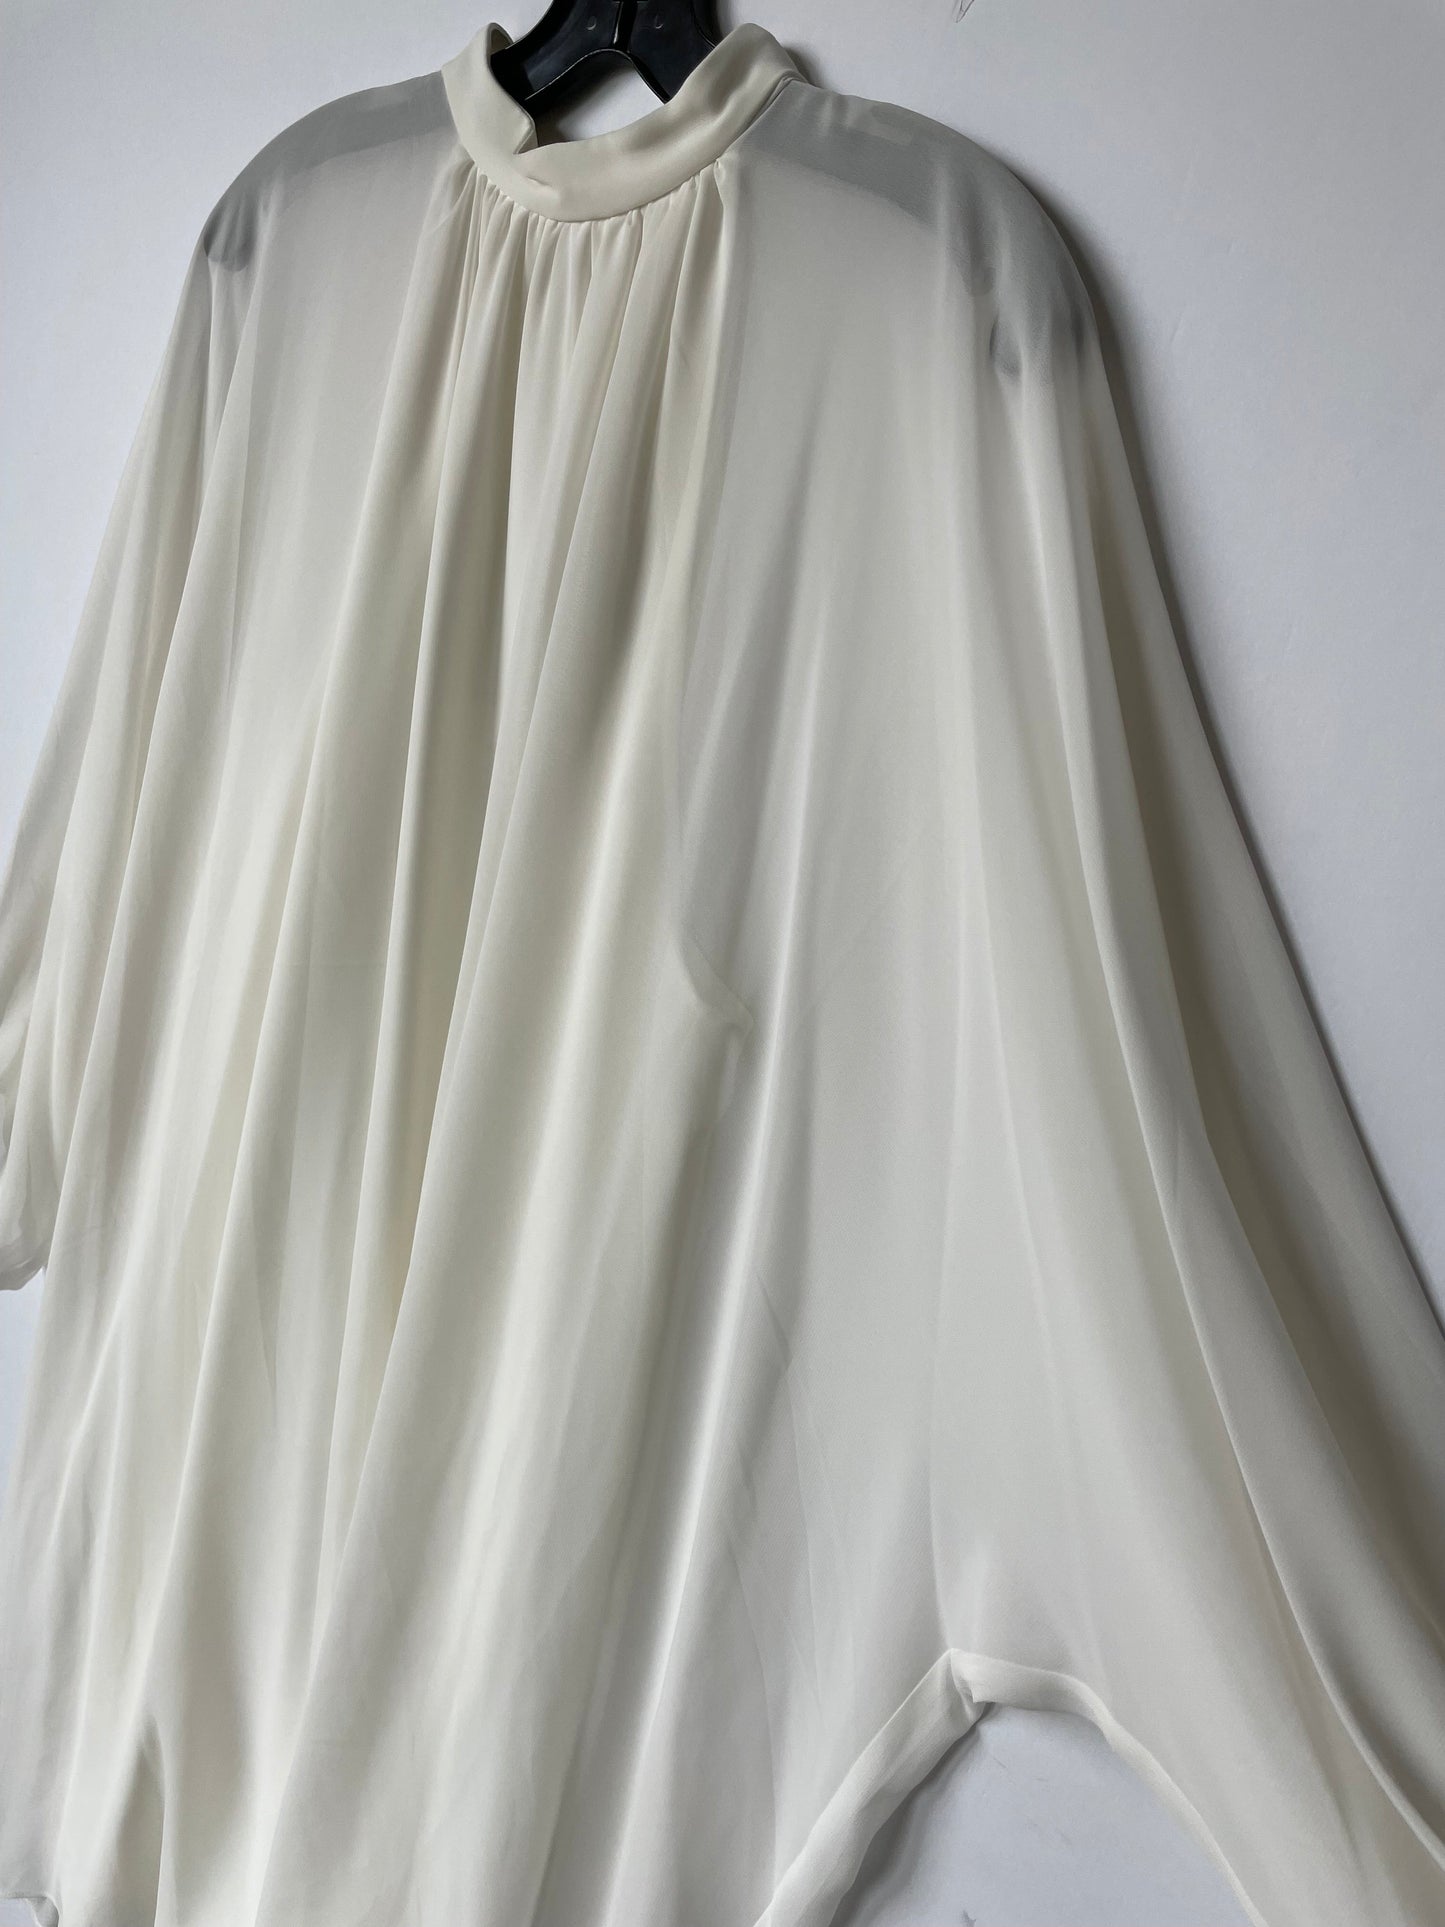 Dress Designer By Trina Turk  Size: Xl